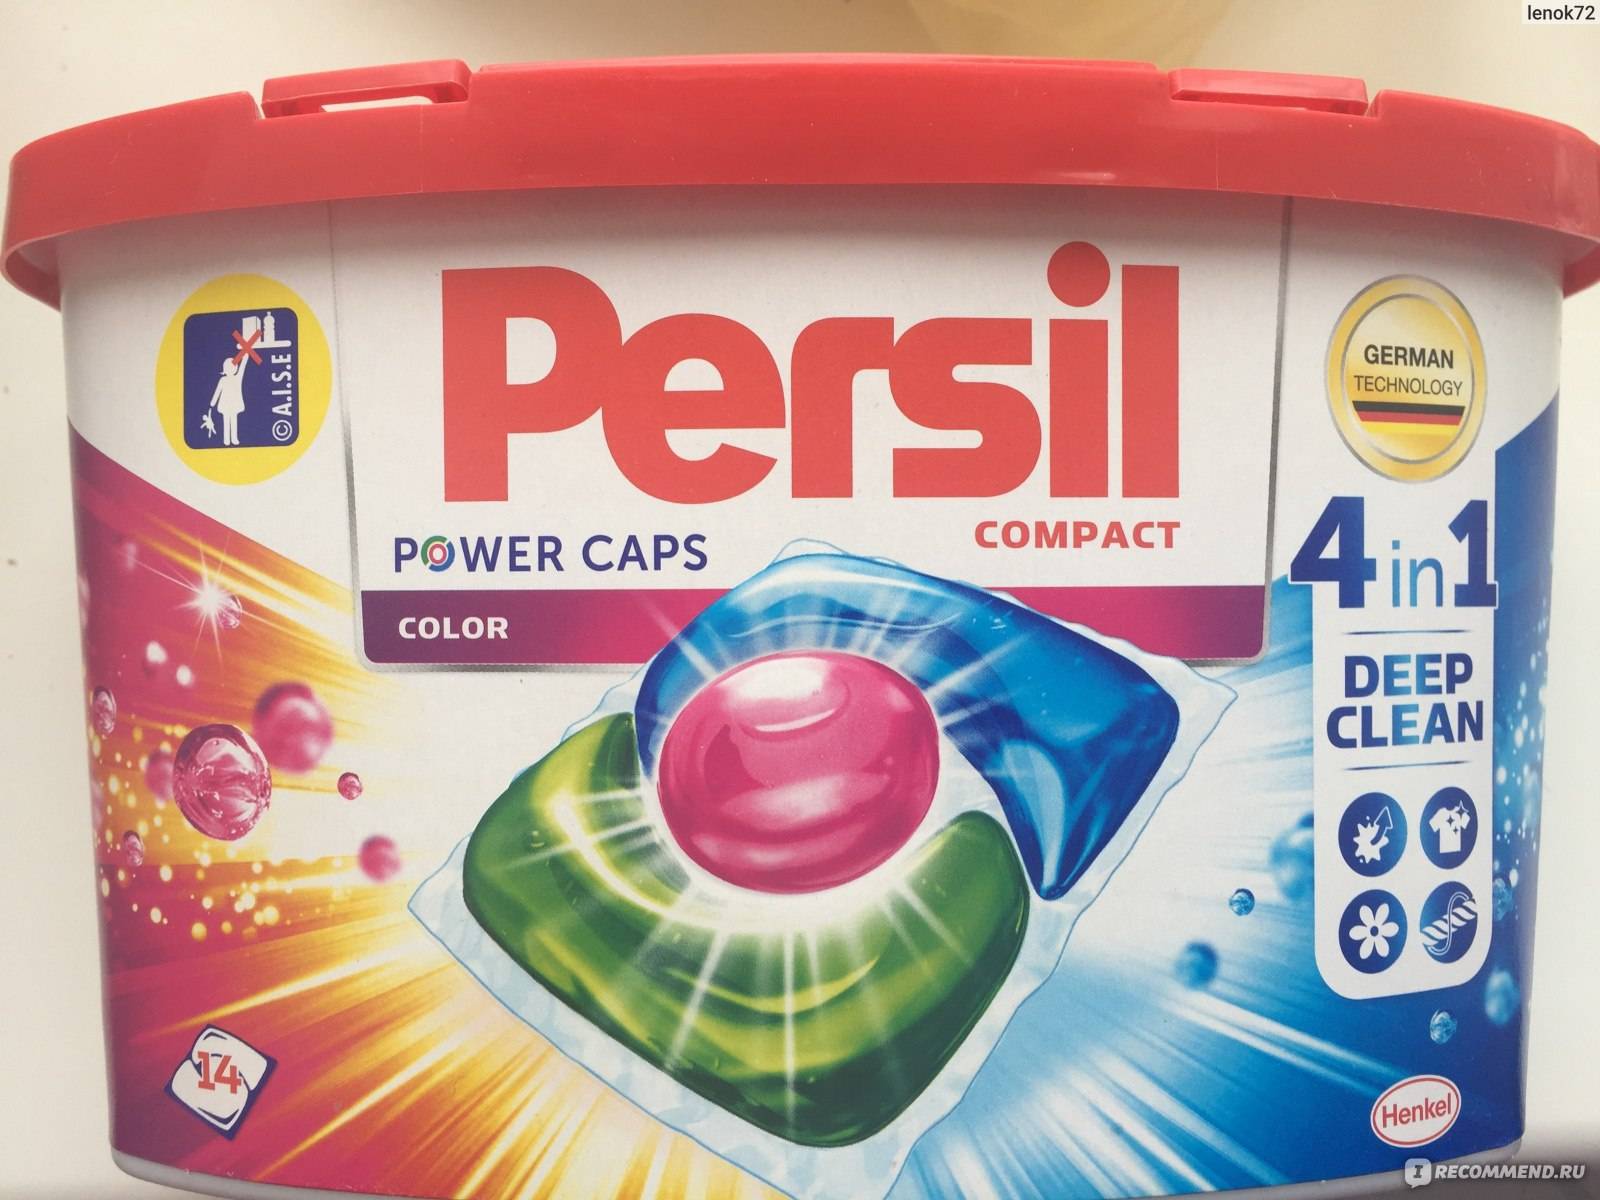 Капсулы компакт. Persil Power caps Compact 4in1. Persil 4in1 42 шт. Persil капсулы Power caps Color 4 in 1. Персил Пауэр-капс 28 стирок колор.